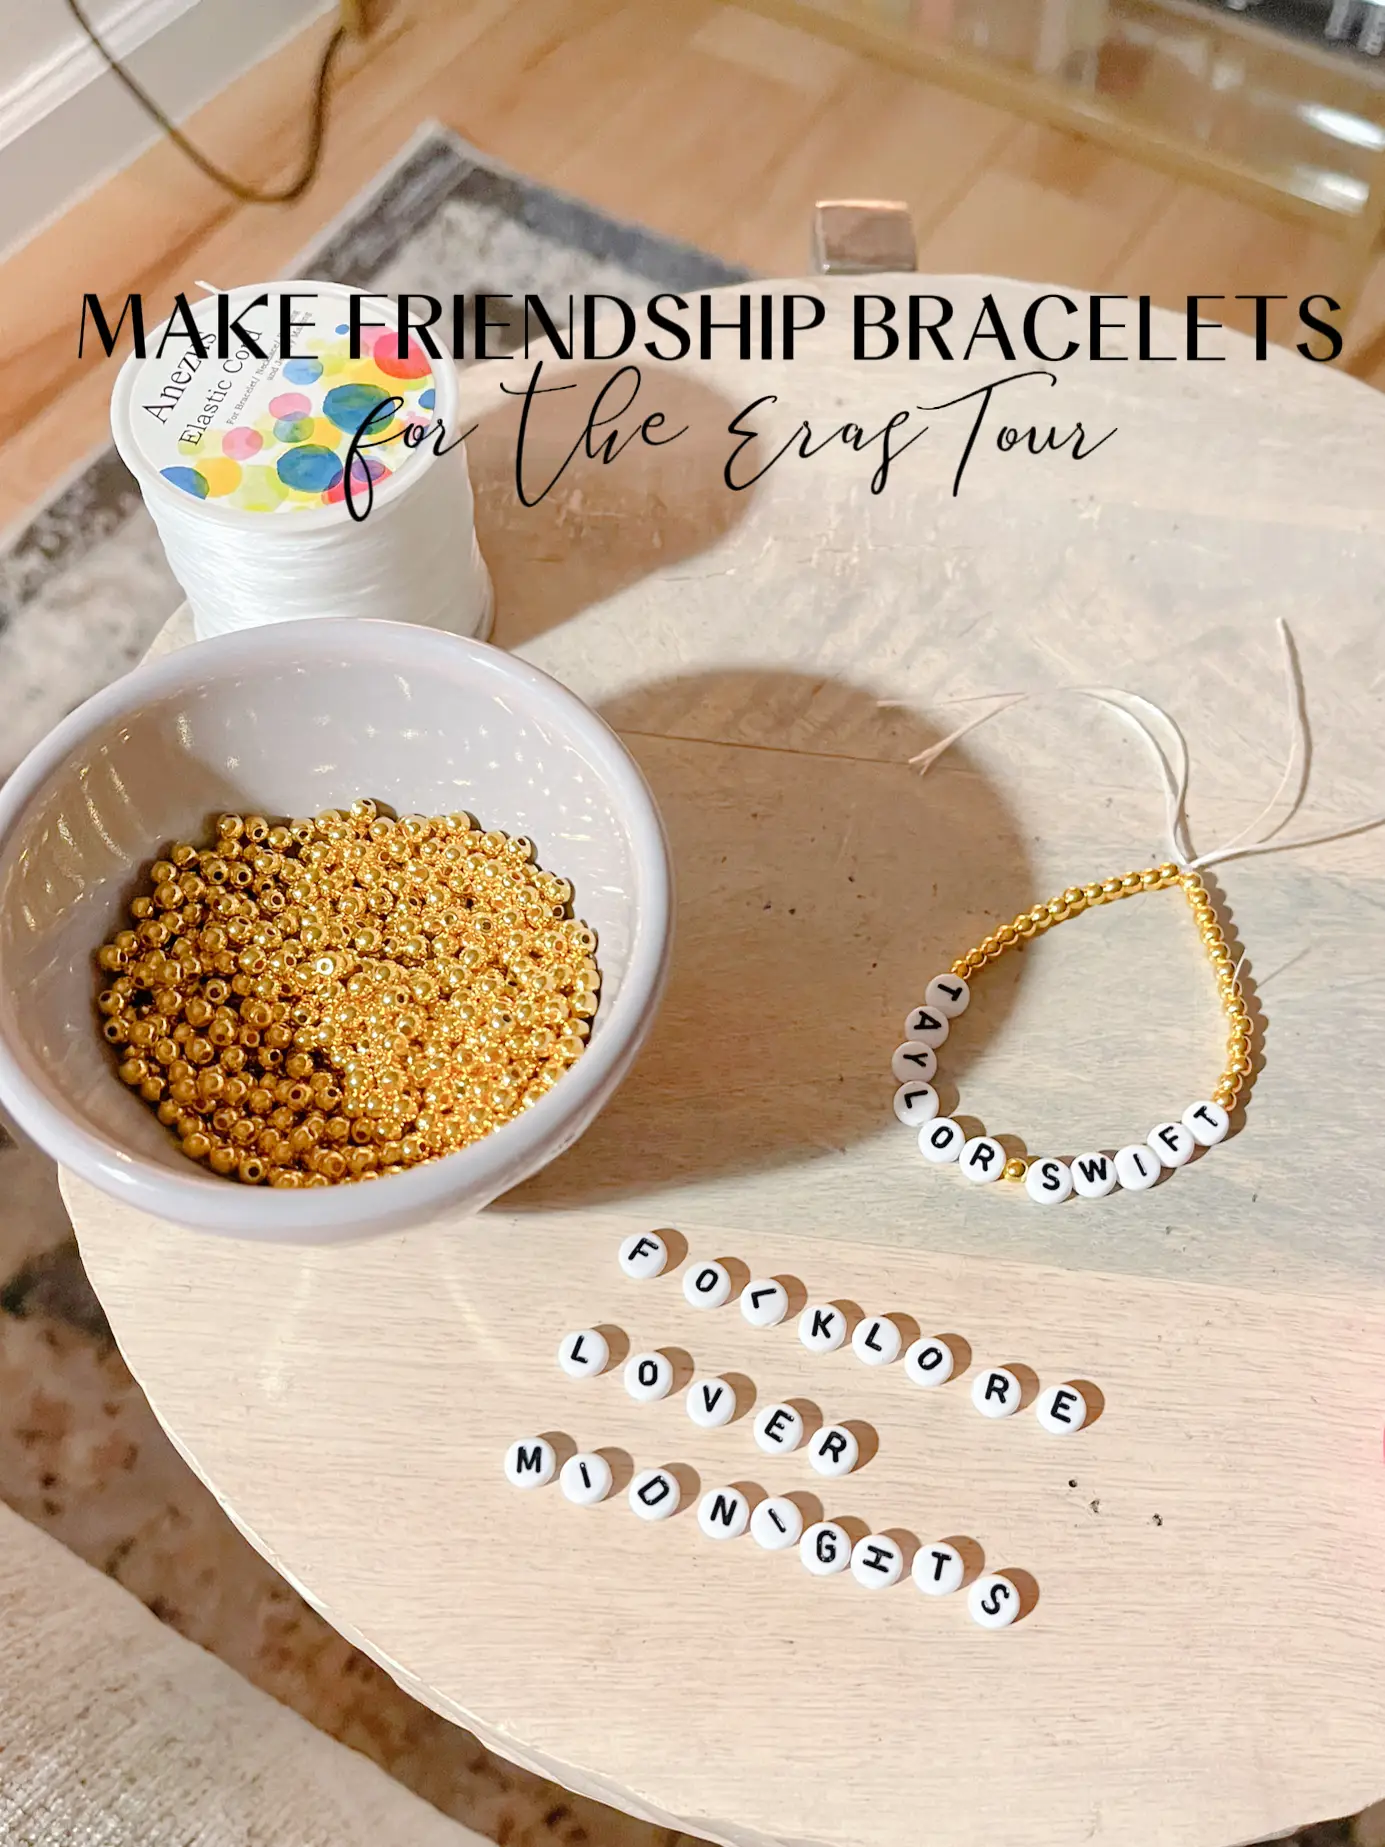 Eras Tour Inspired Friendship Bracelets, TS Tradable Friendship Bracelets,  Gift for Her 